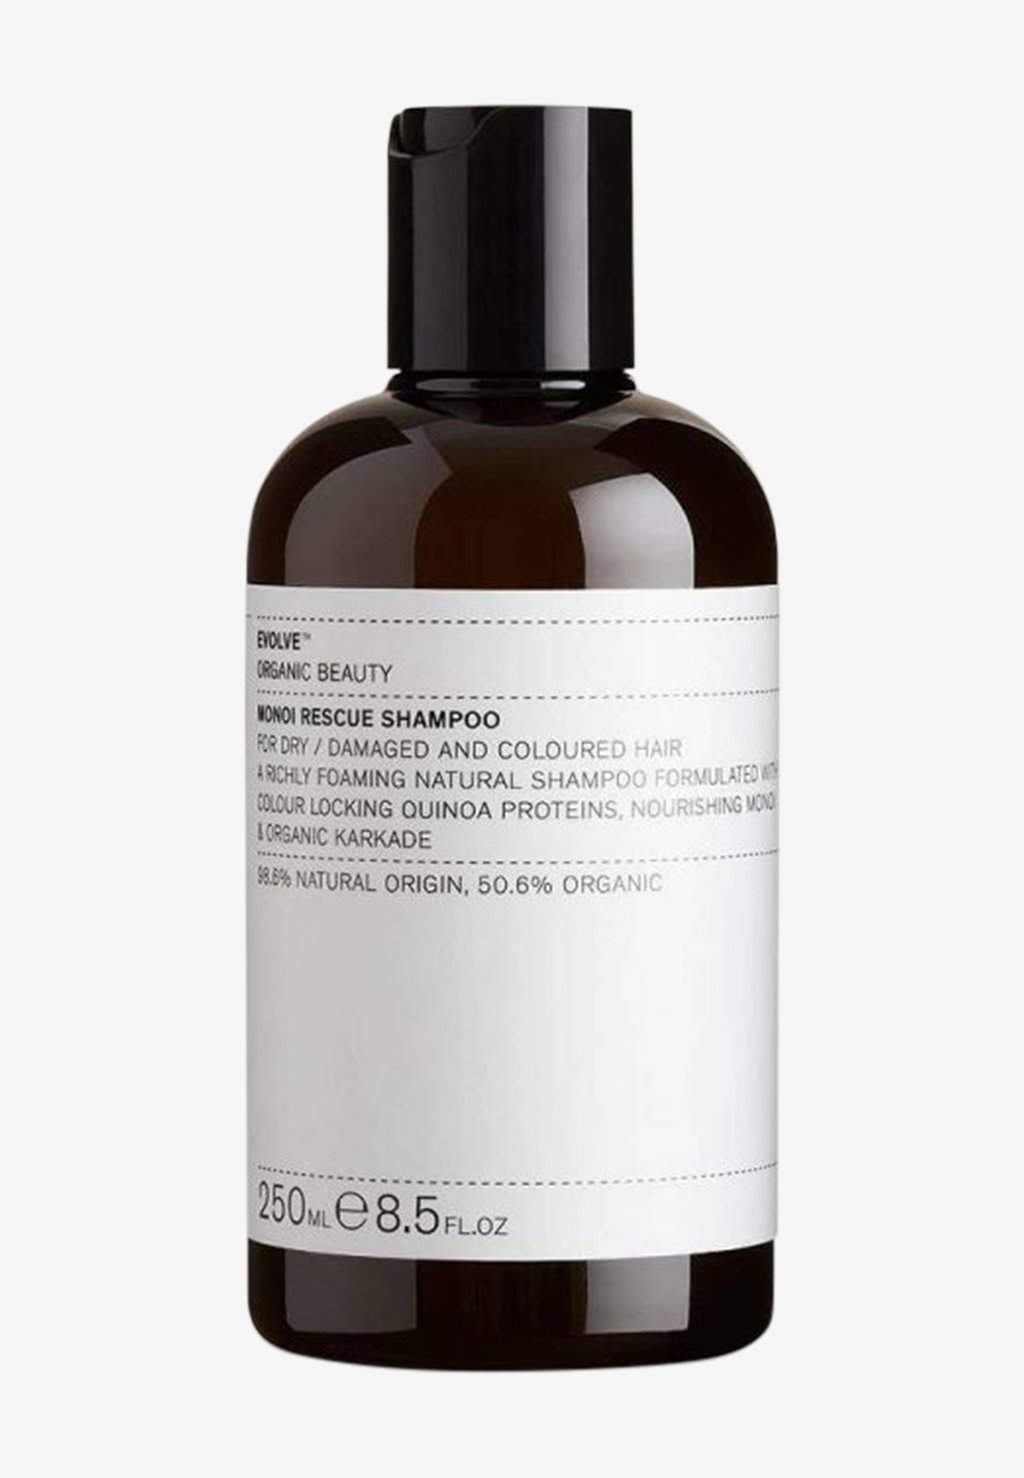 цена Шампунь Monoi Rescue Shampoo Evolve Organic Beauty, коричневый